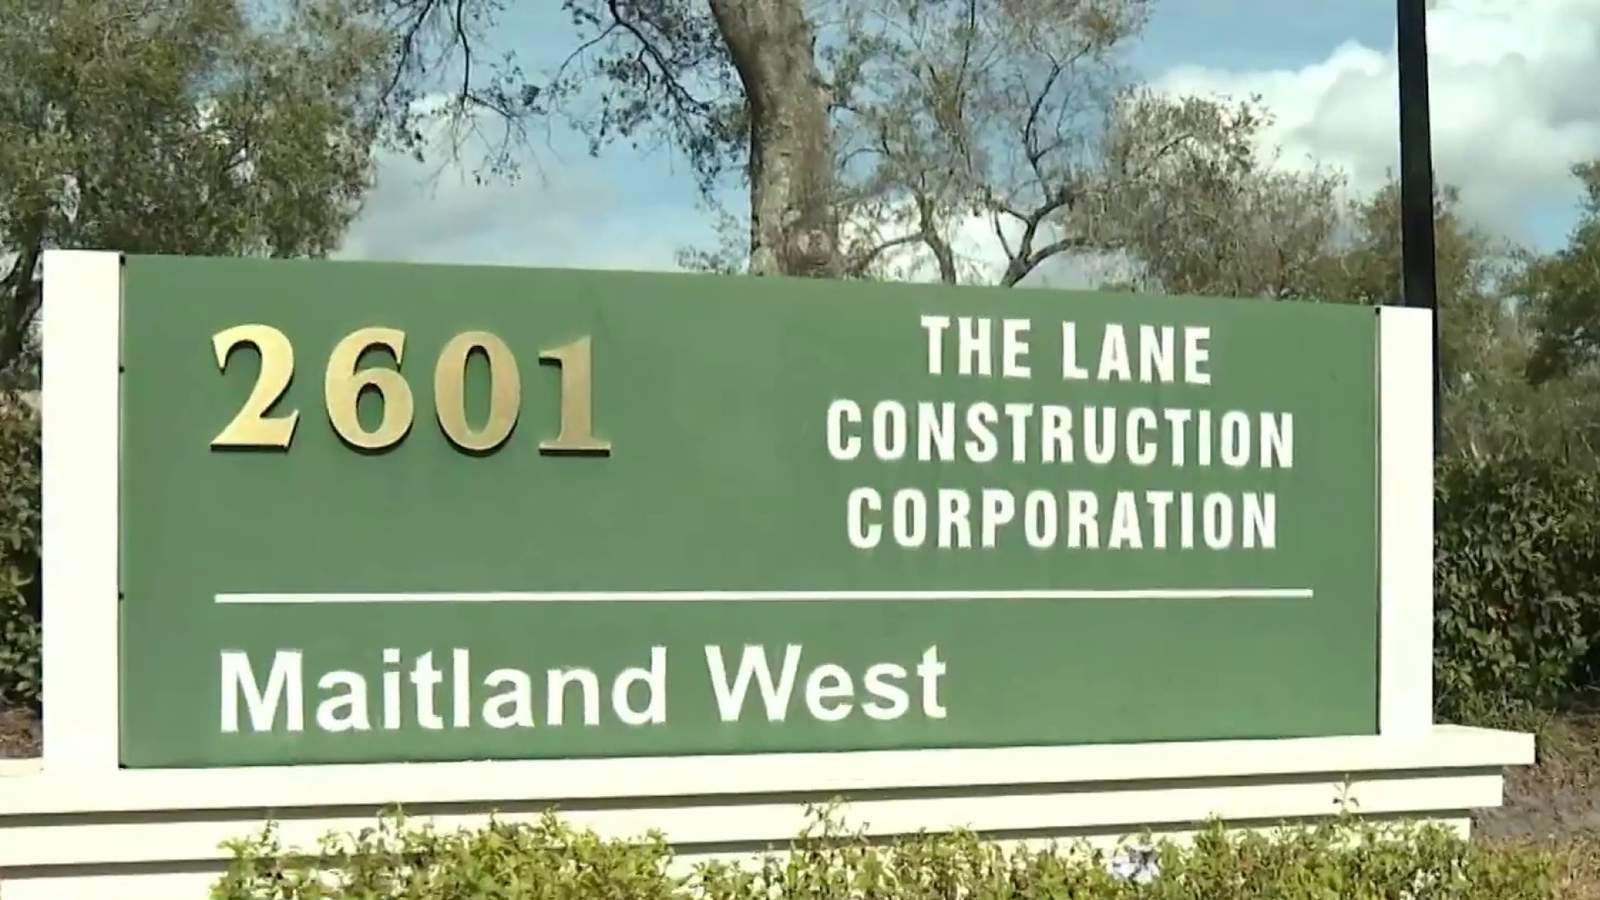 I-4 Ultimate lawsuit: Builder seeks $132 million in damages from partner construction firm